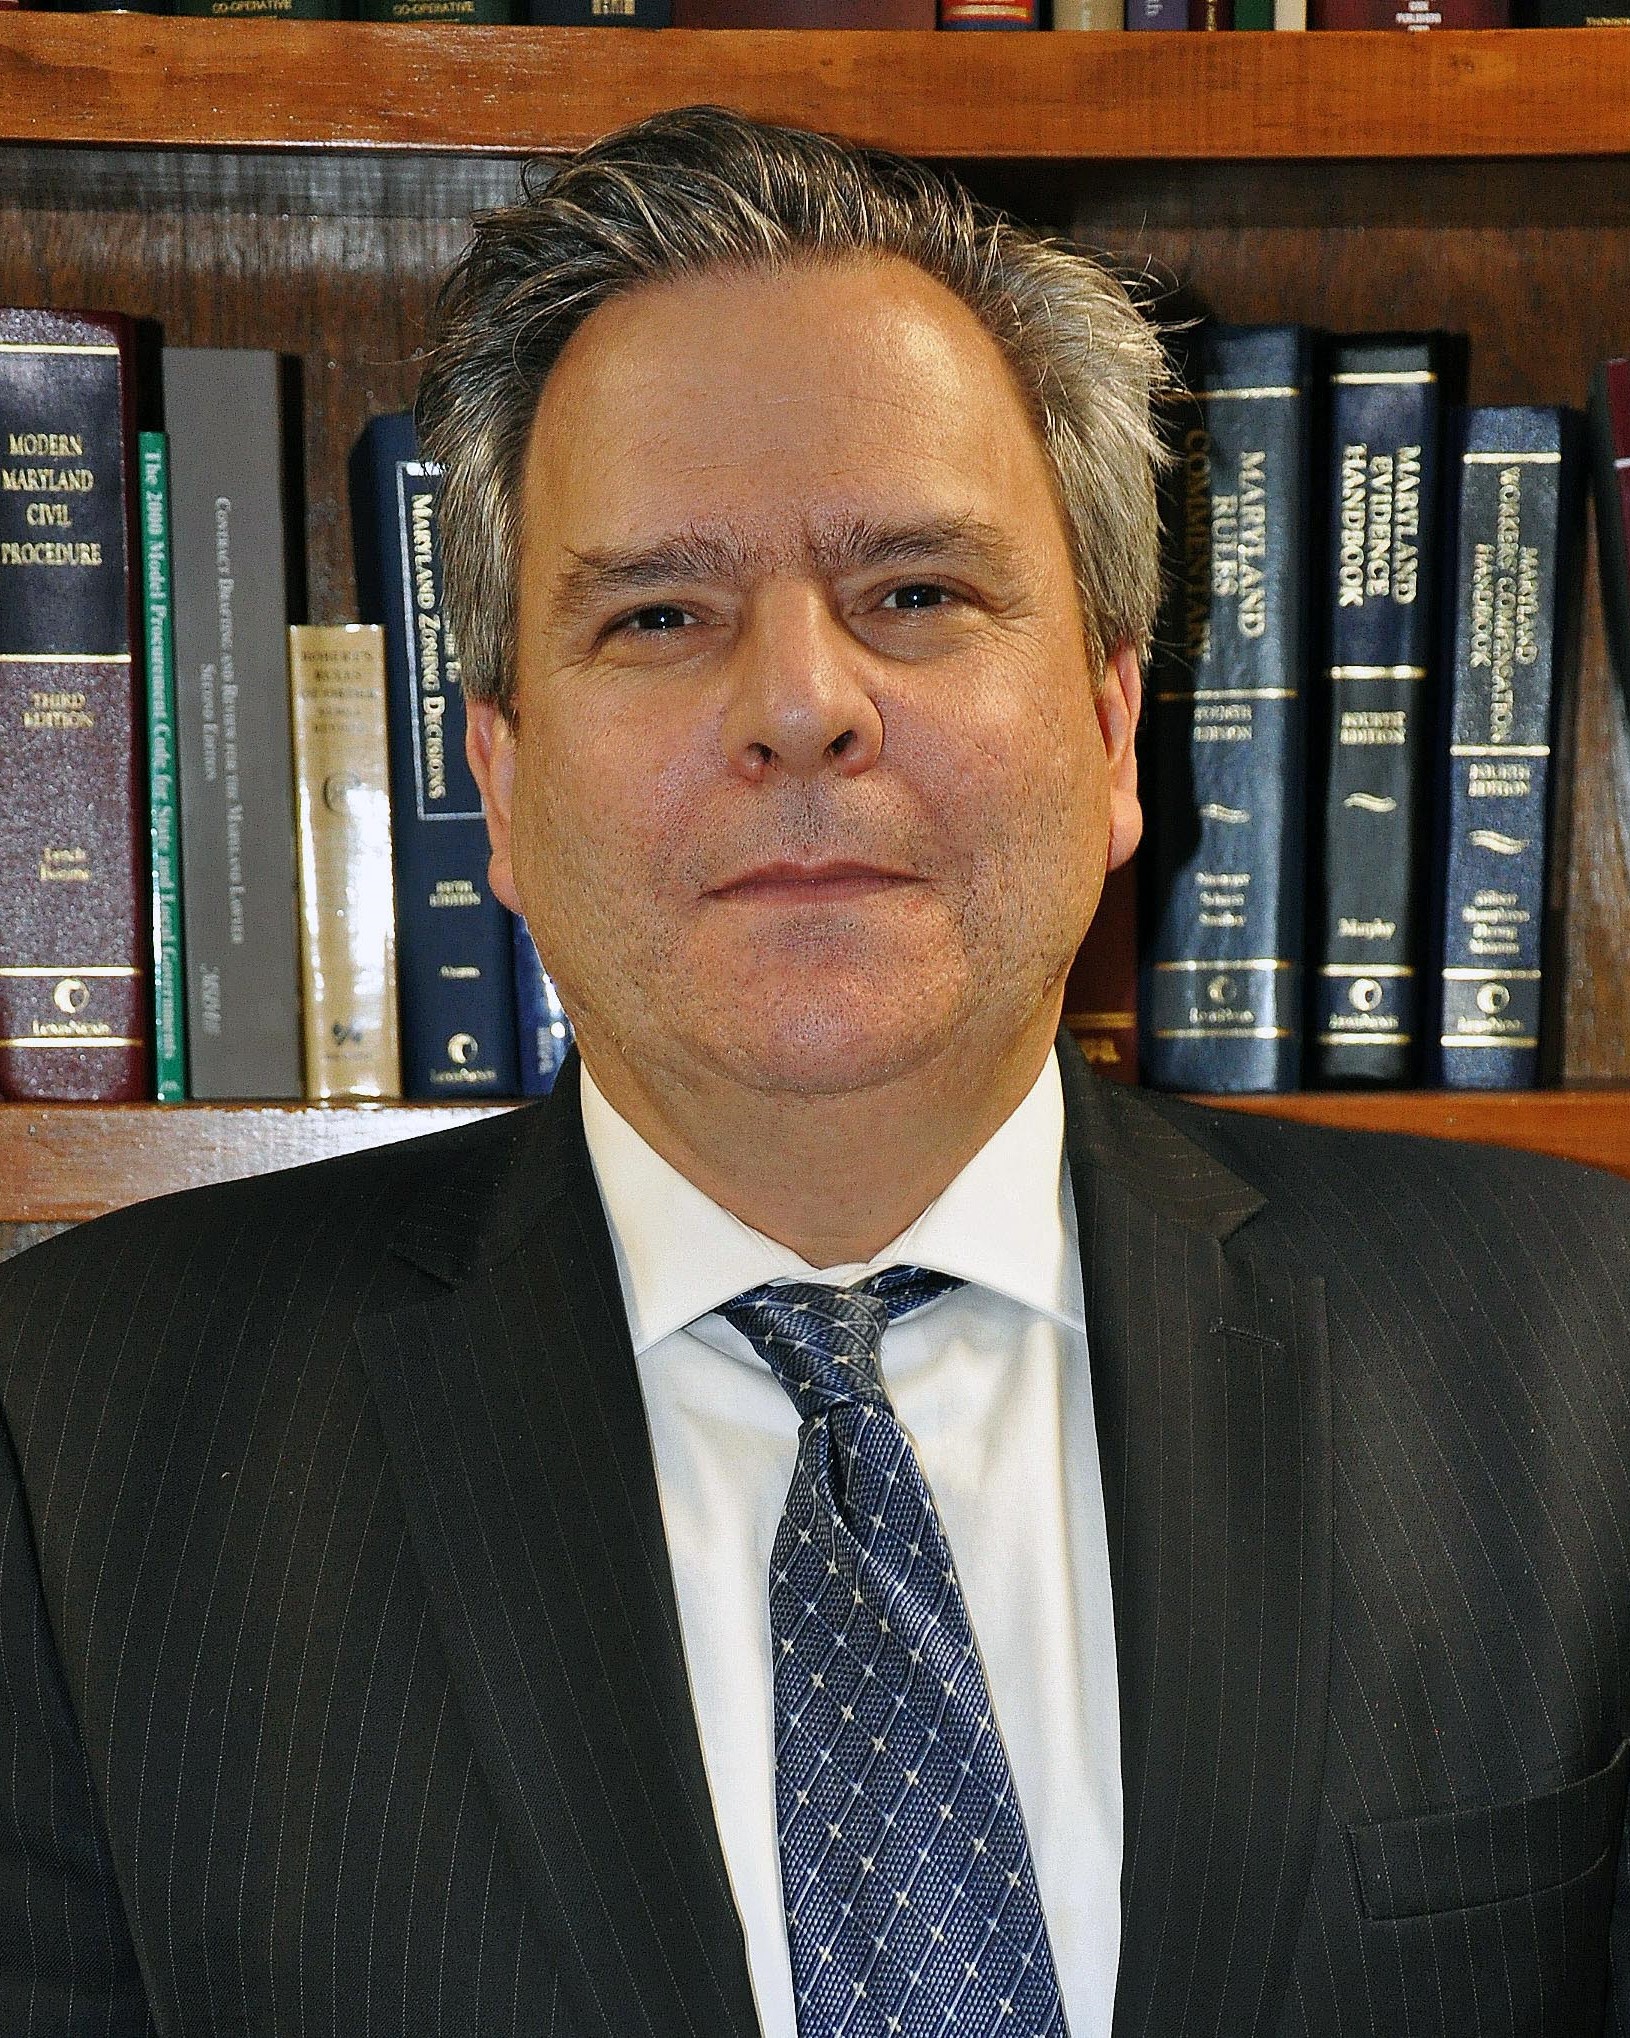 Headshot of County Administrator David Weiskopf standing in front of a bookshelf.